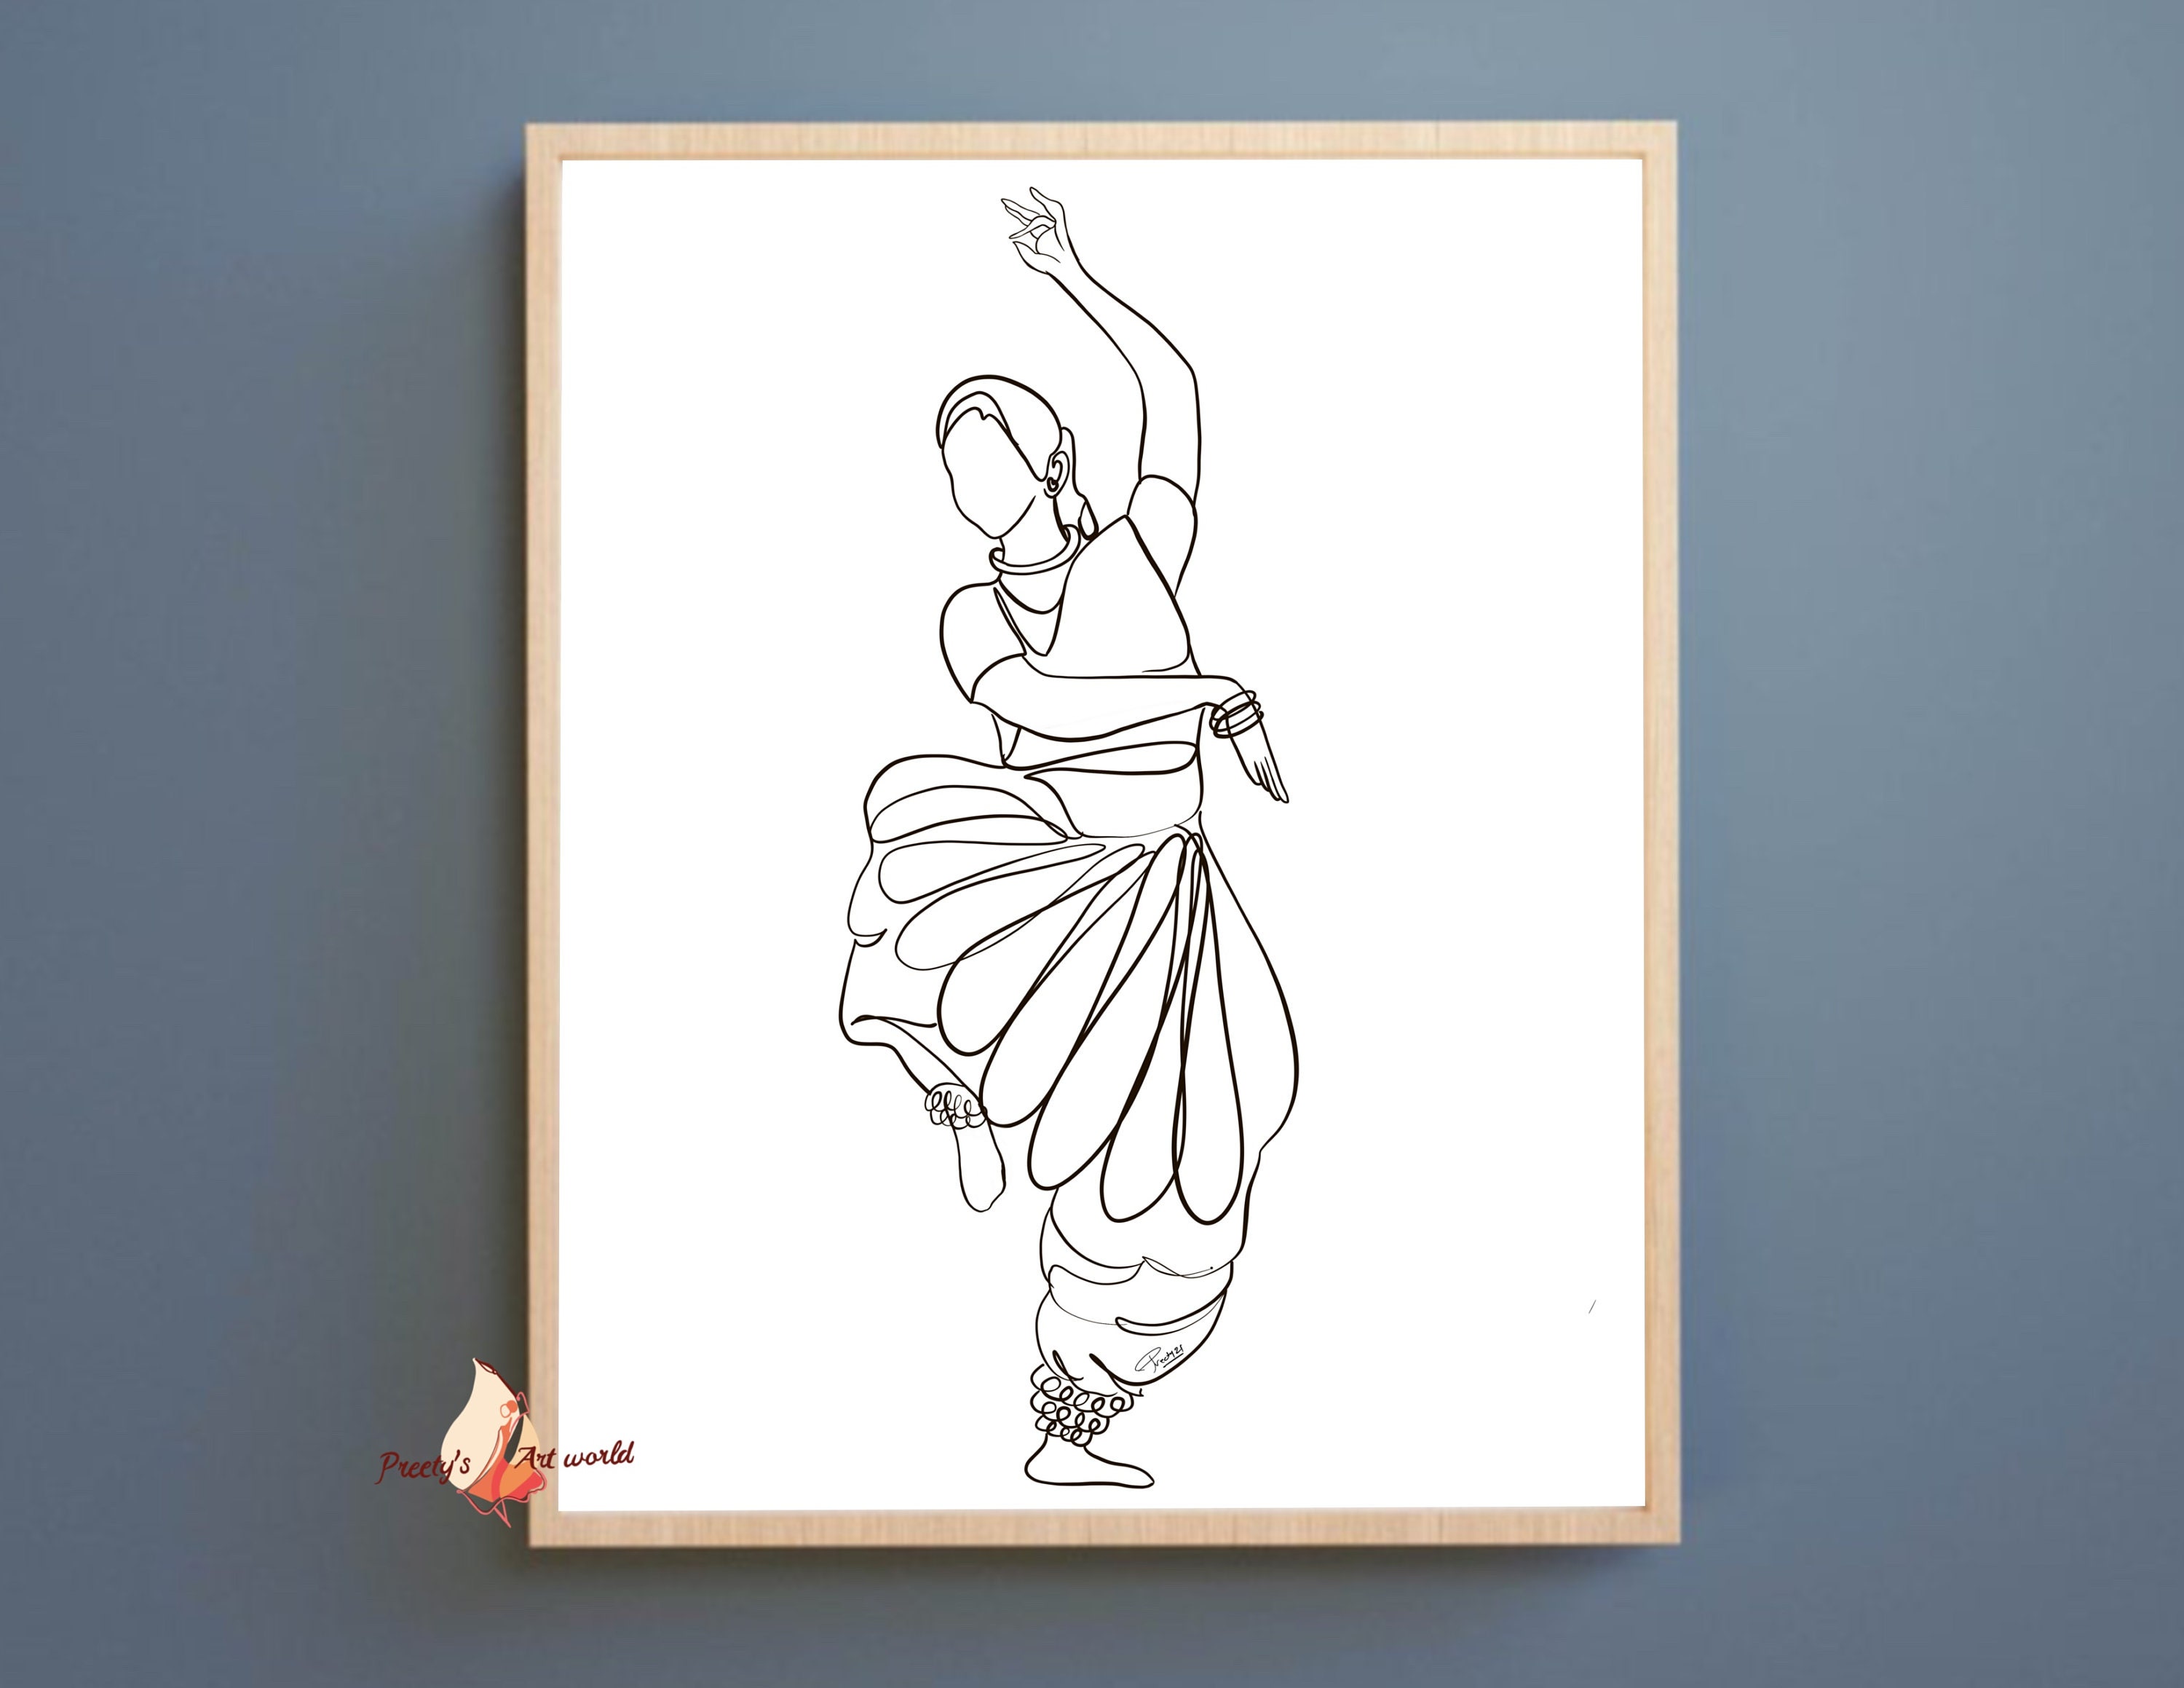 Indian classical dances Drawing by Krishna Regula - Fine Art America